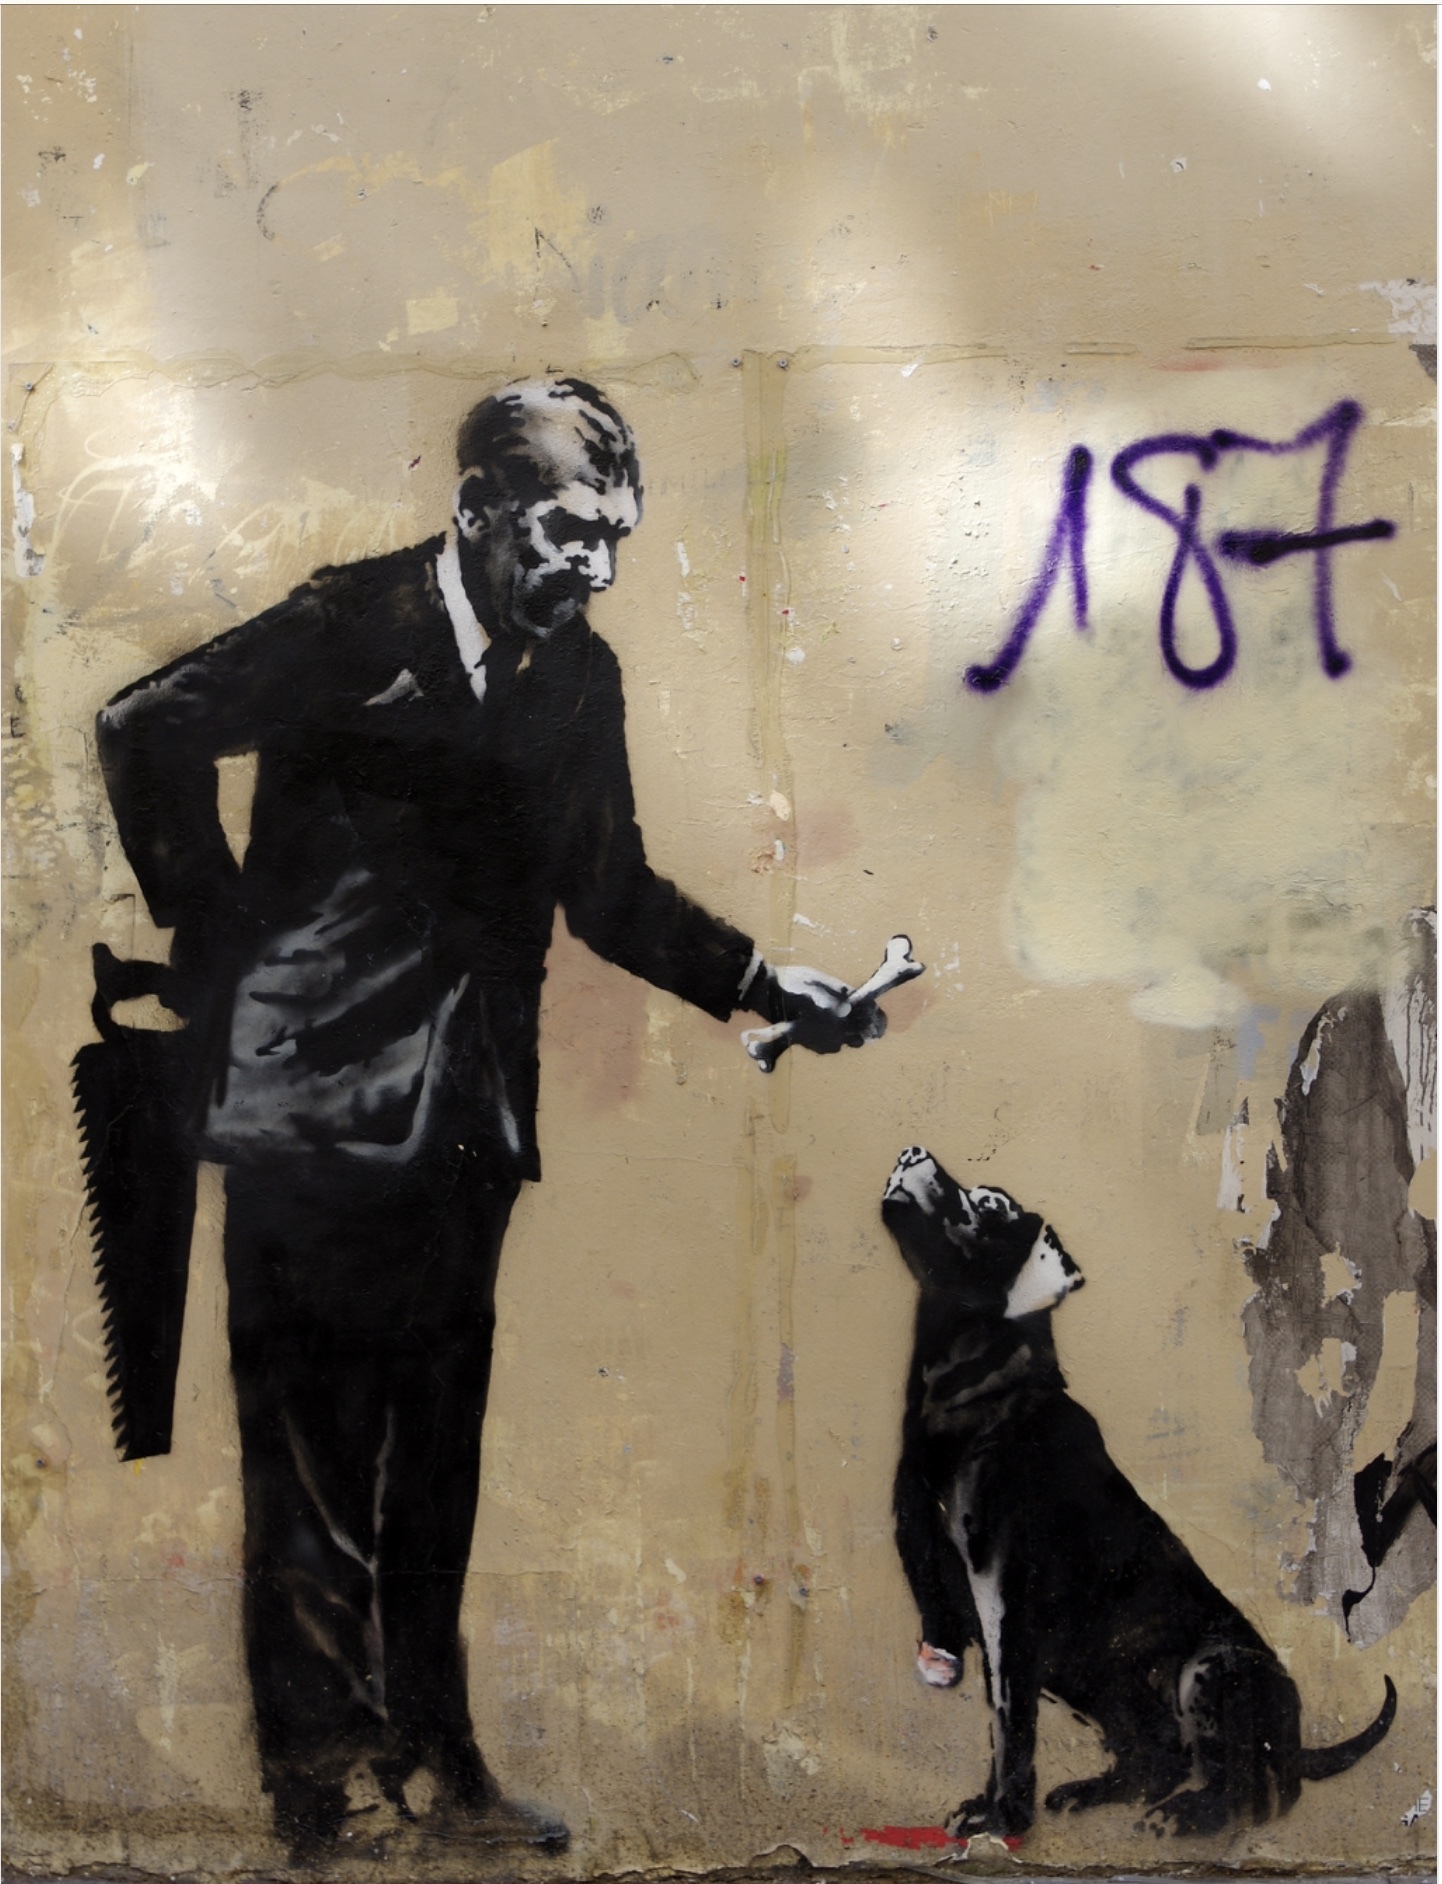 Graffiti 5160 Banksy et A2 by the artist A2 captured by Artparis in Paris France